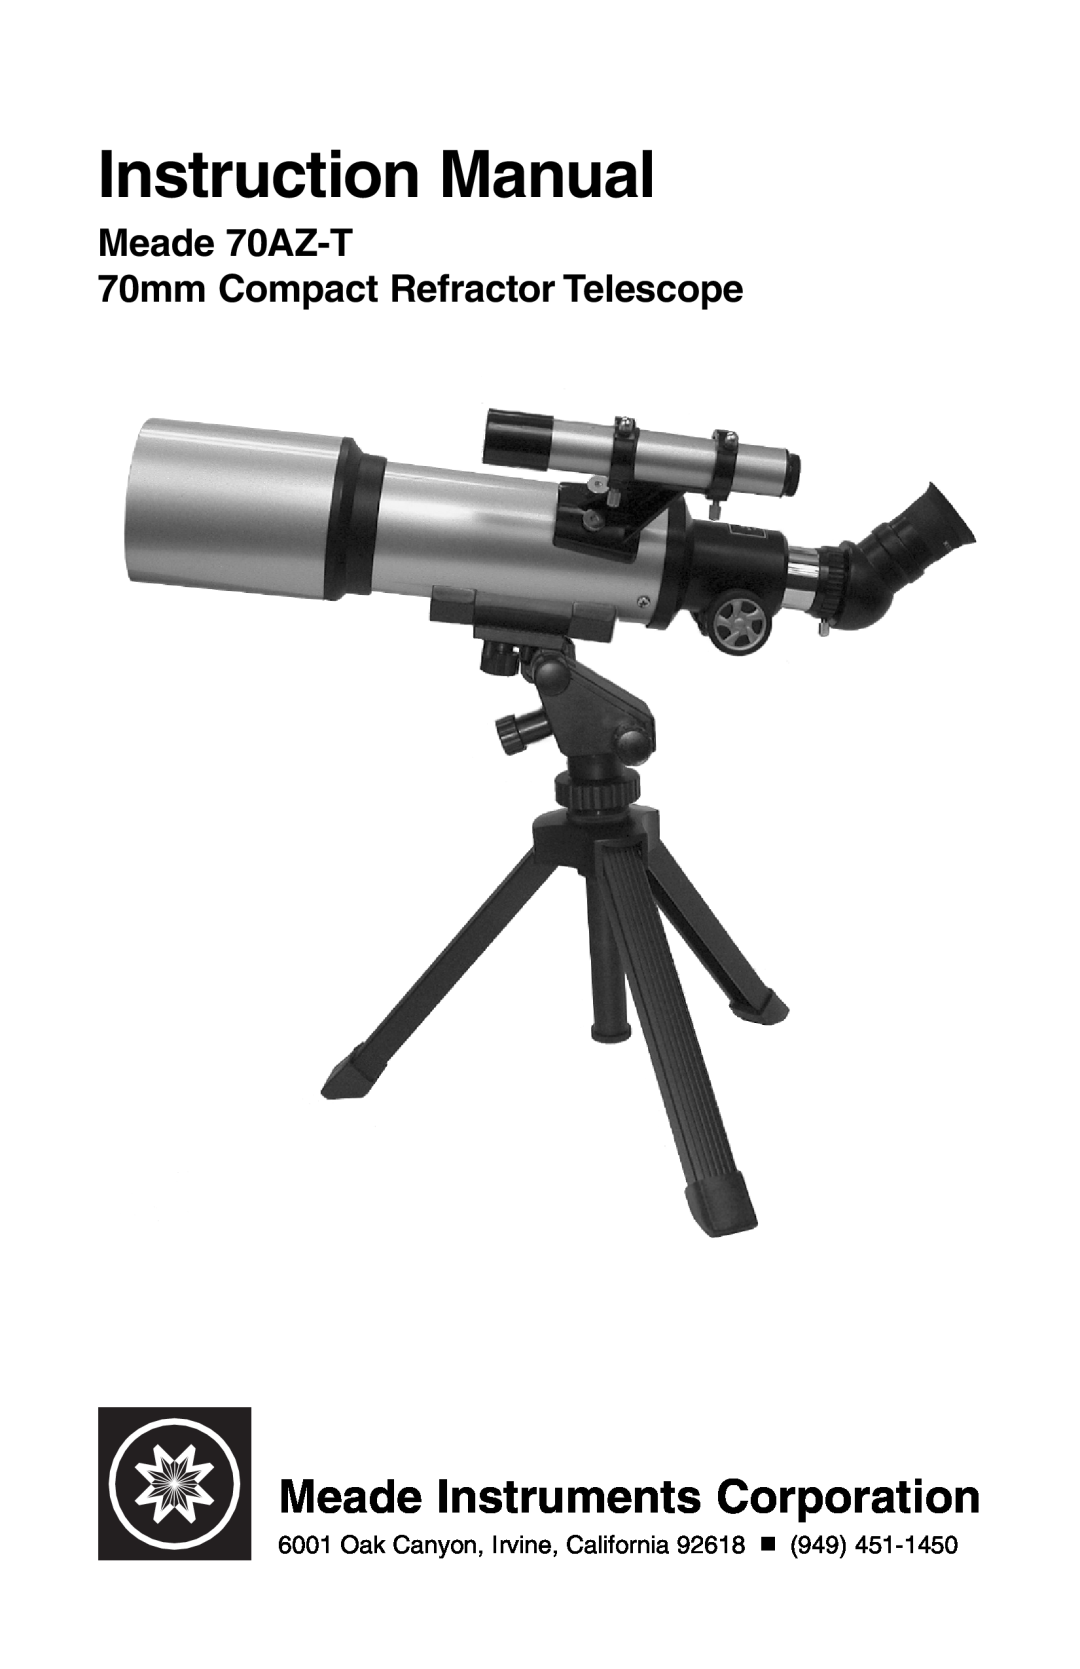 Meade instruction manual Meade 70AZ-T 70mm Compact Refractor Telescope, Meade Instruments Corporation 